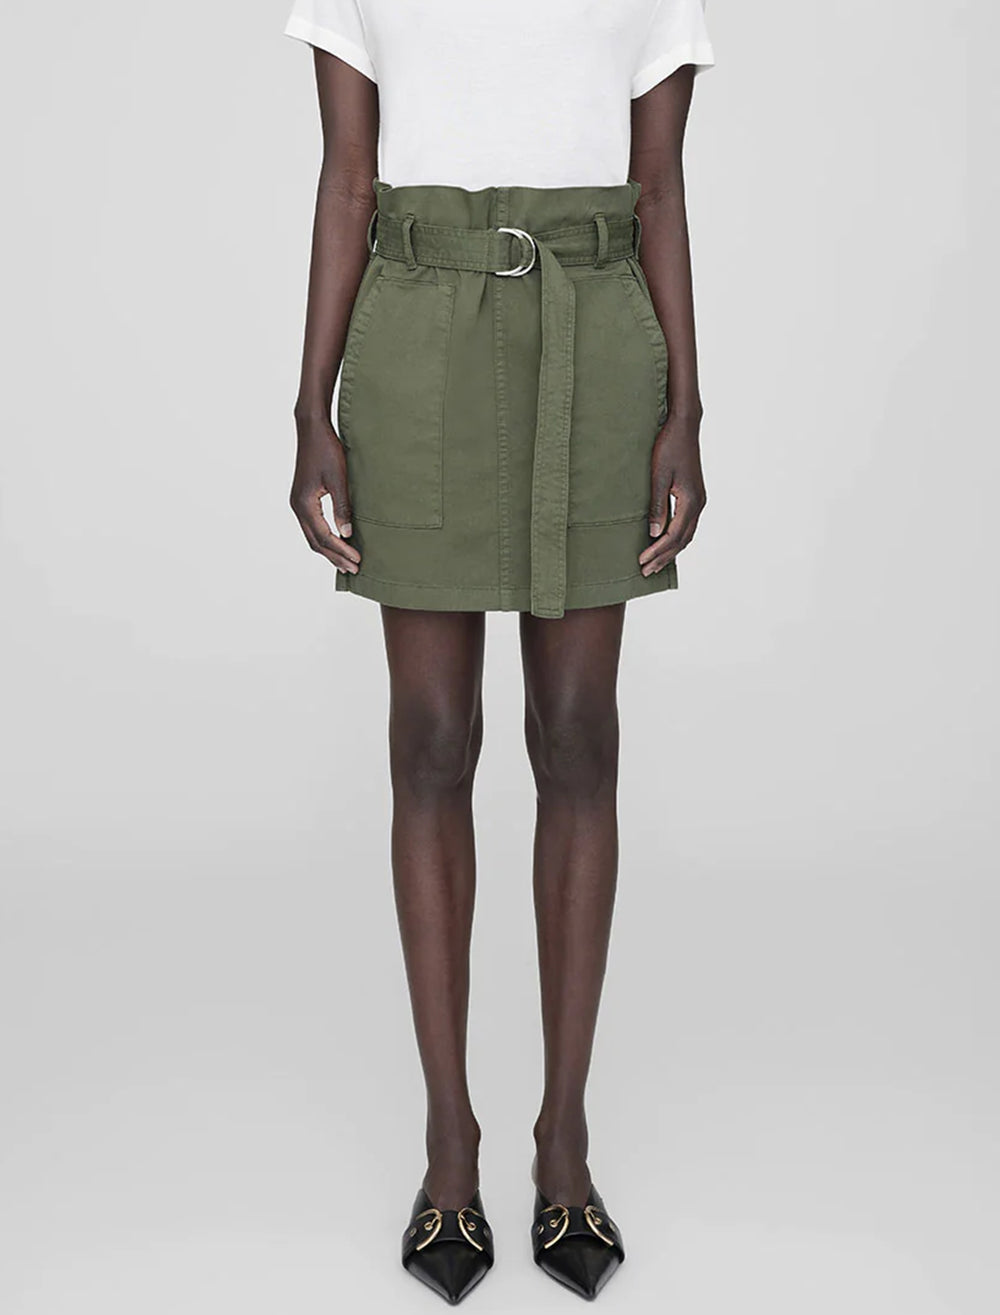 Model wearing Anine Bing's aveline skirt in army green.